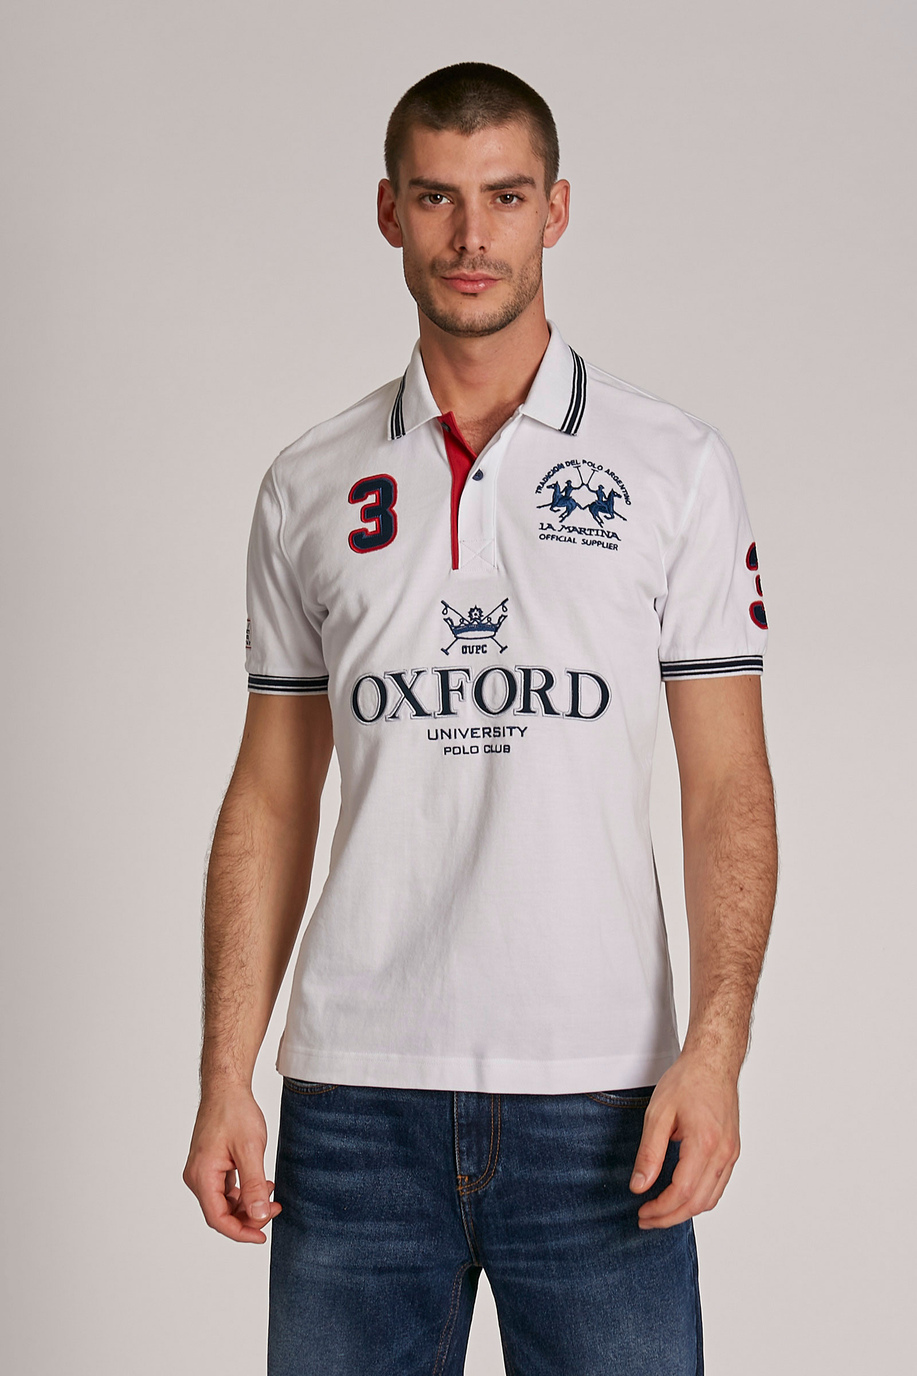 Men's short-sleeved regular-fit 100% cotton polo shirt - Polo Shirts | La Martina - Official Online Shop